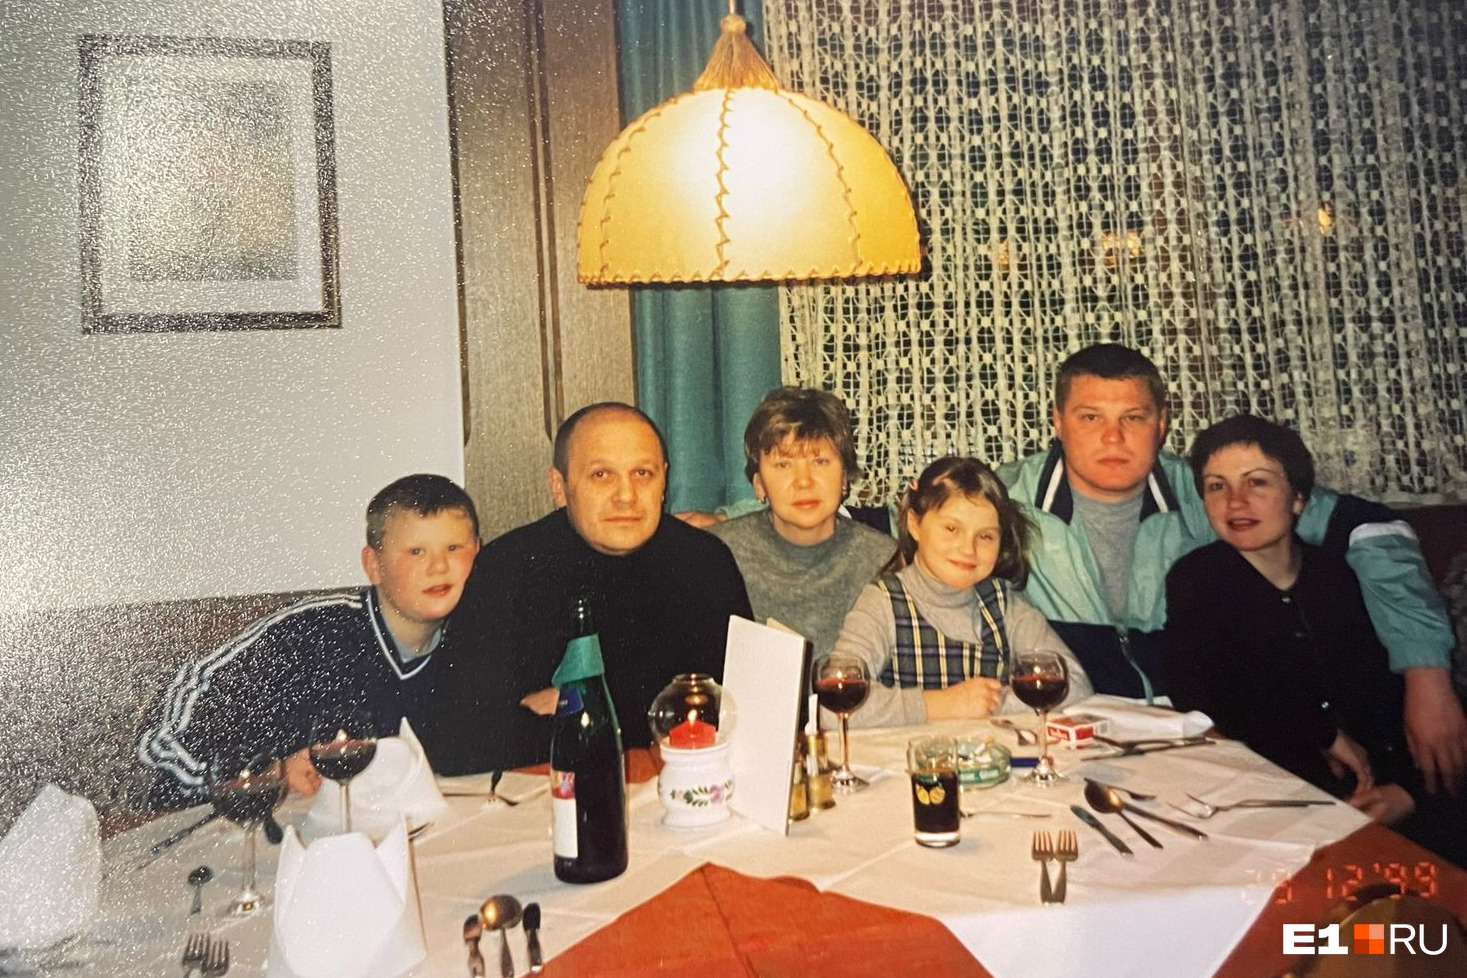 Слева направо: Эдуард Дейч, Дмитрий Дейч, Татьяна Дейч, Евгения, Алексей Зубакин, мама Евгении